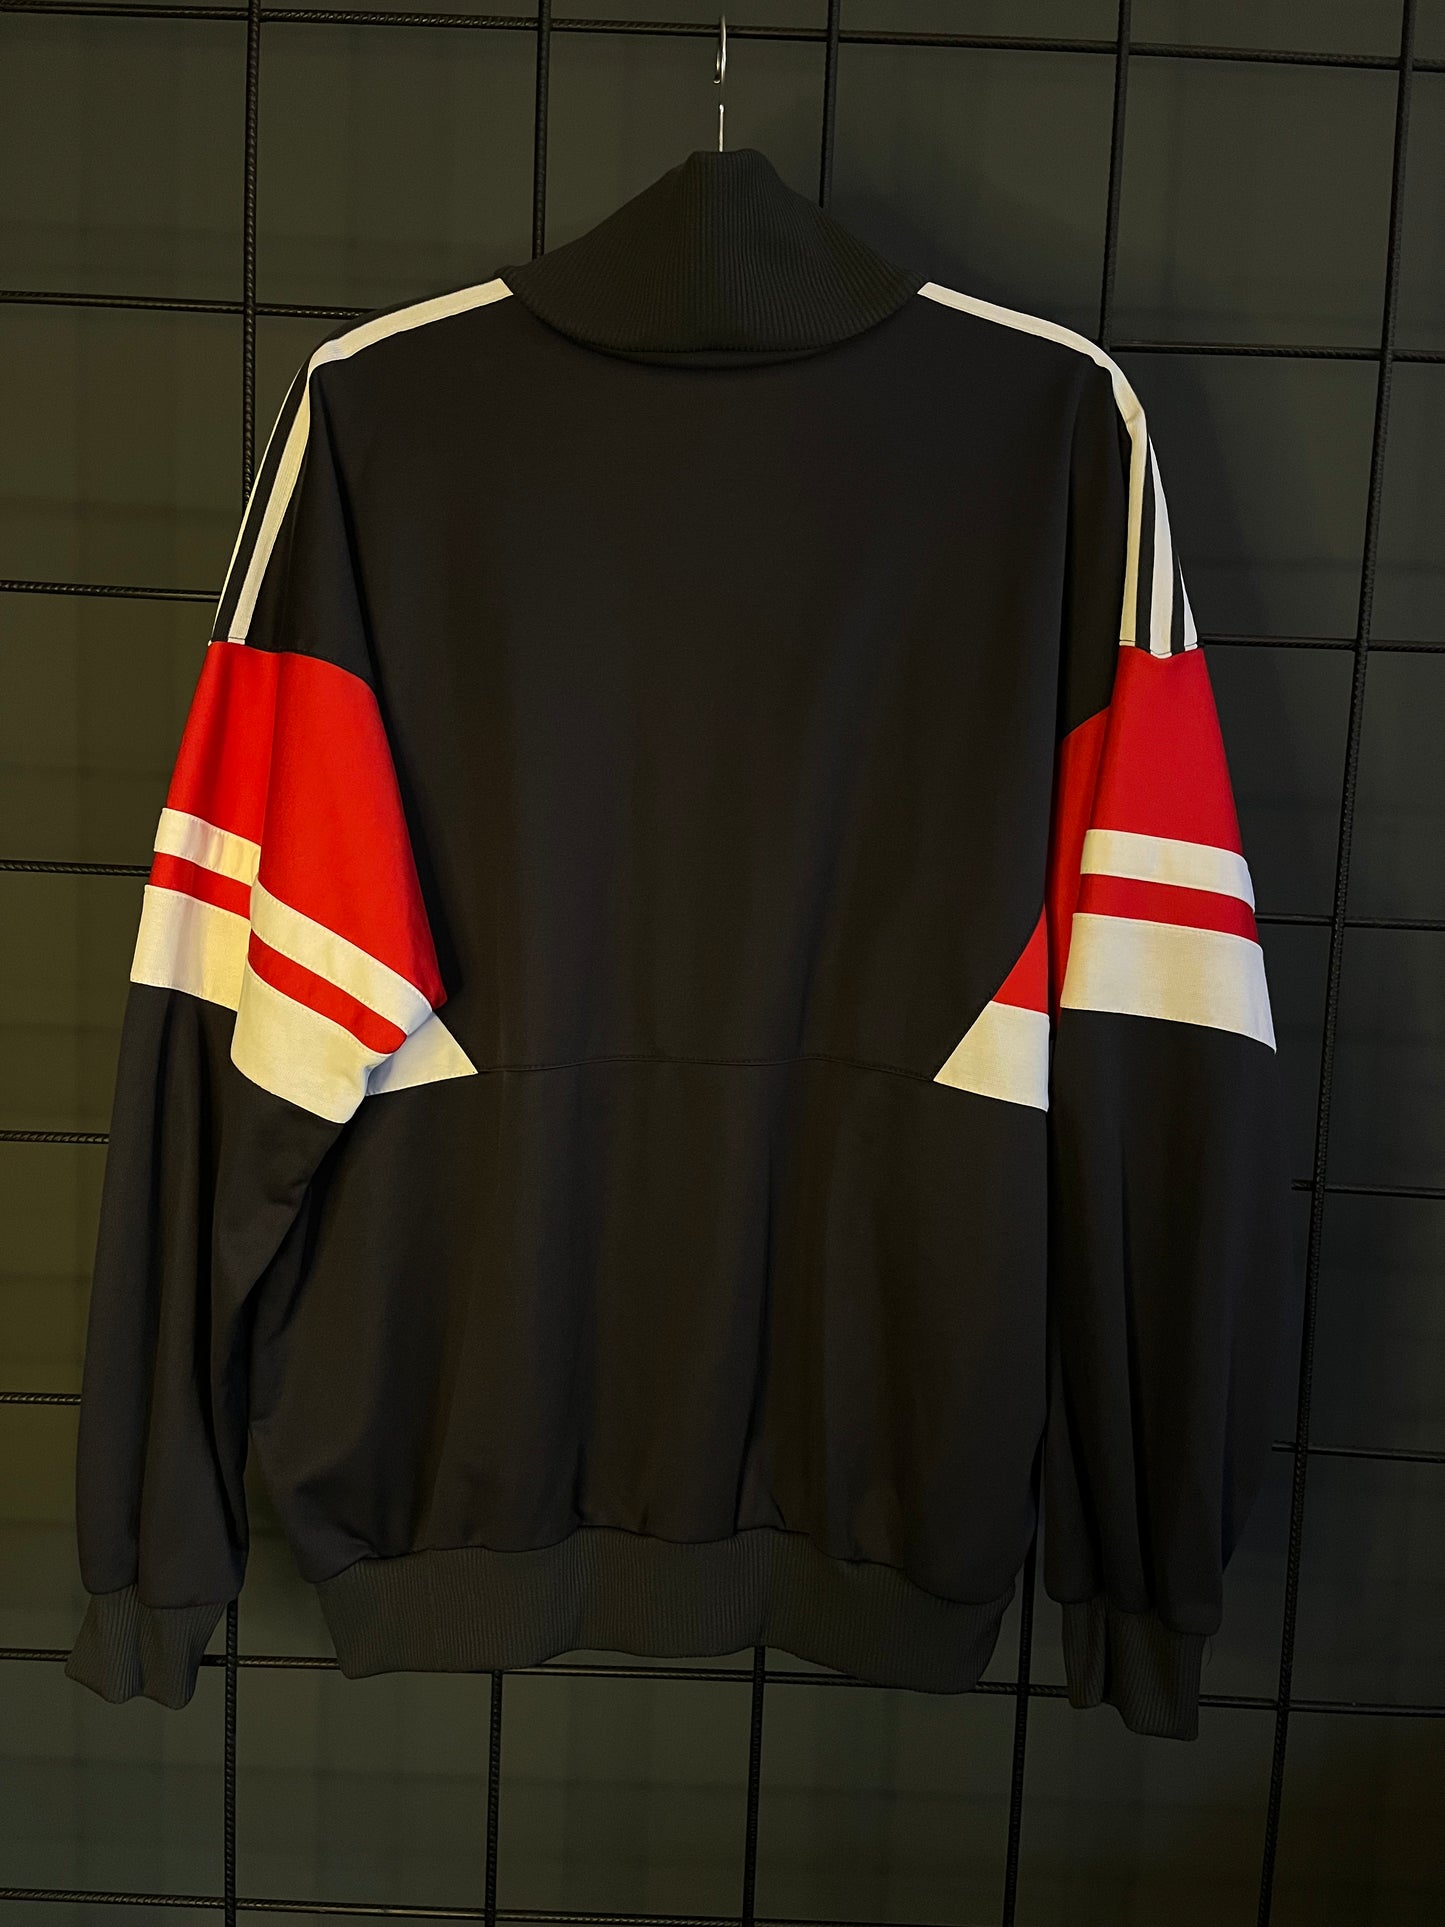 Adidas - Sportjacket - Vintage